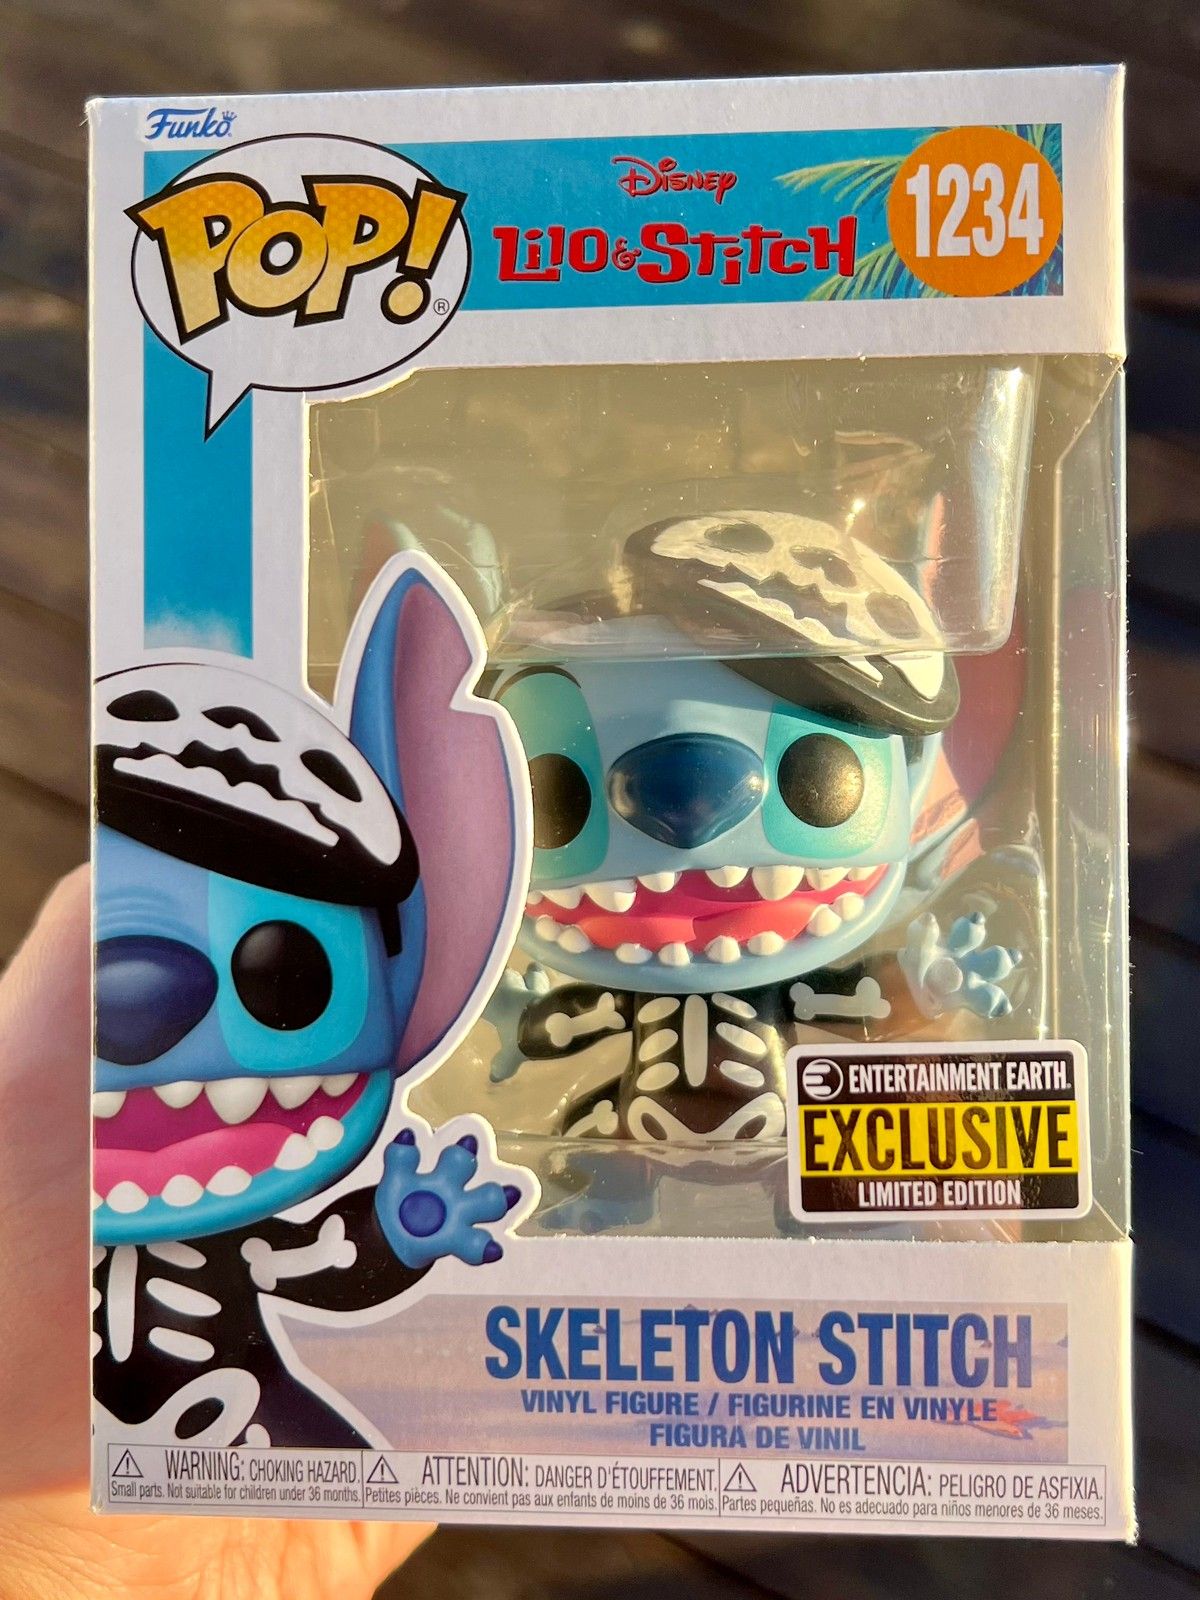 FUNKO POP! Skeleton Stitch Limited Edition Vinyl figure